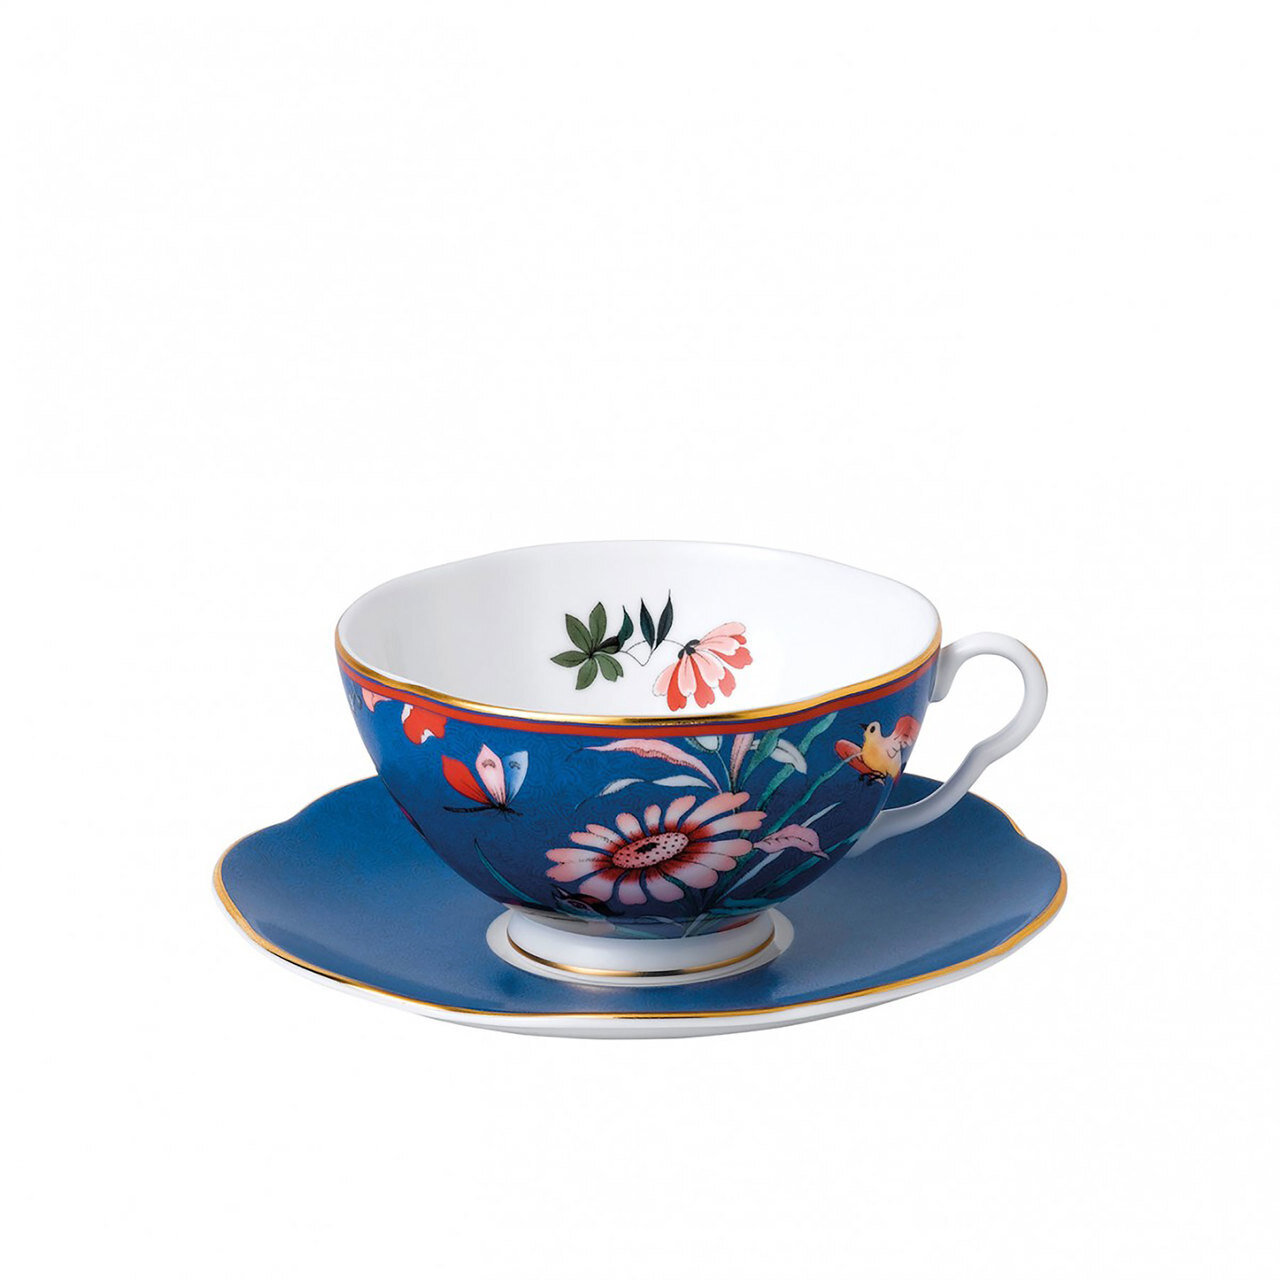 Wedgwood Paeonia Blush Teacup & saucer Set Blue 40032091